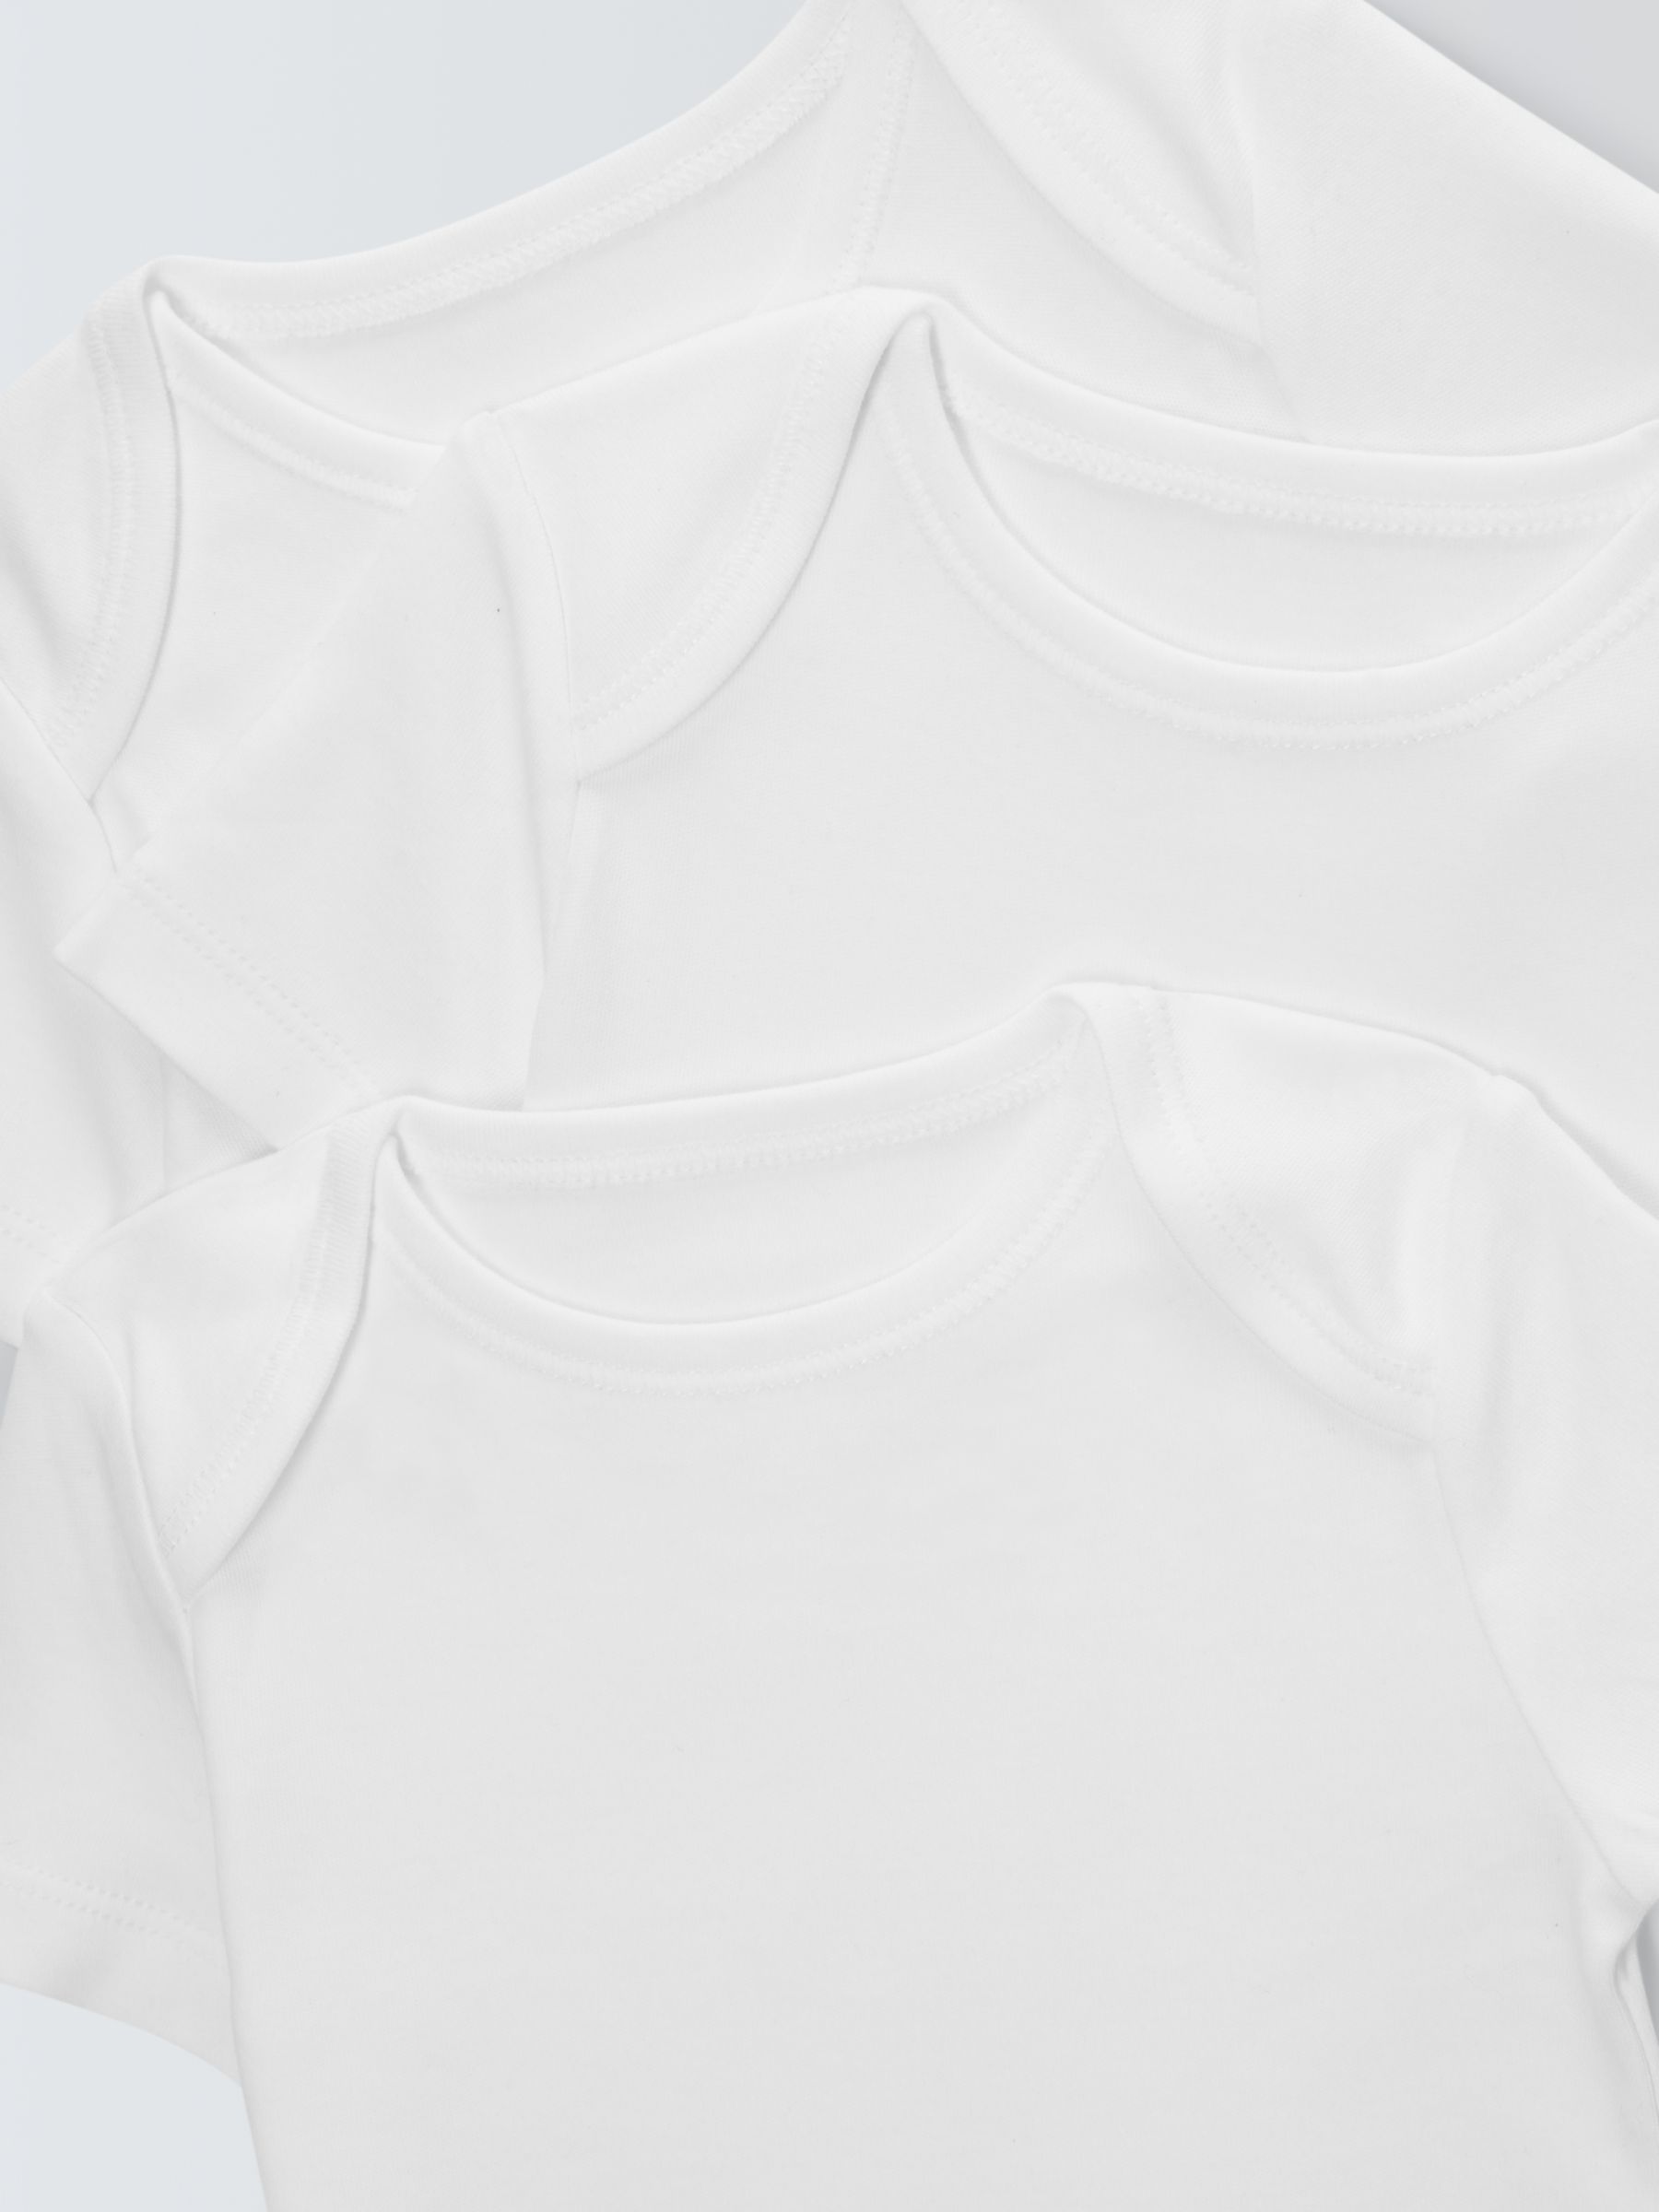 Buy John Lewis Baby Pima Cotton Short Sleeve Bodysuit, Pack of 3, White Online at johnlewis.com